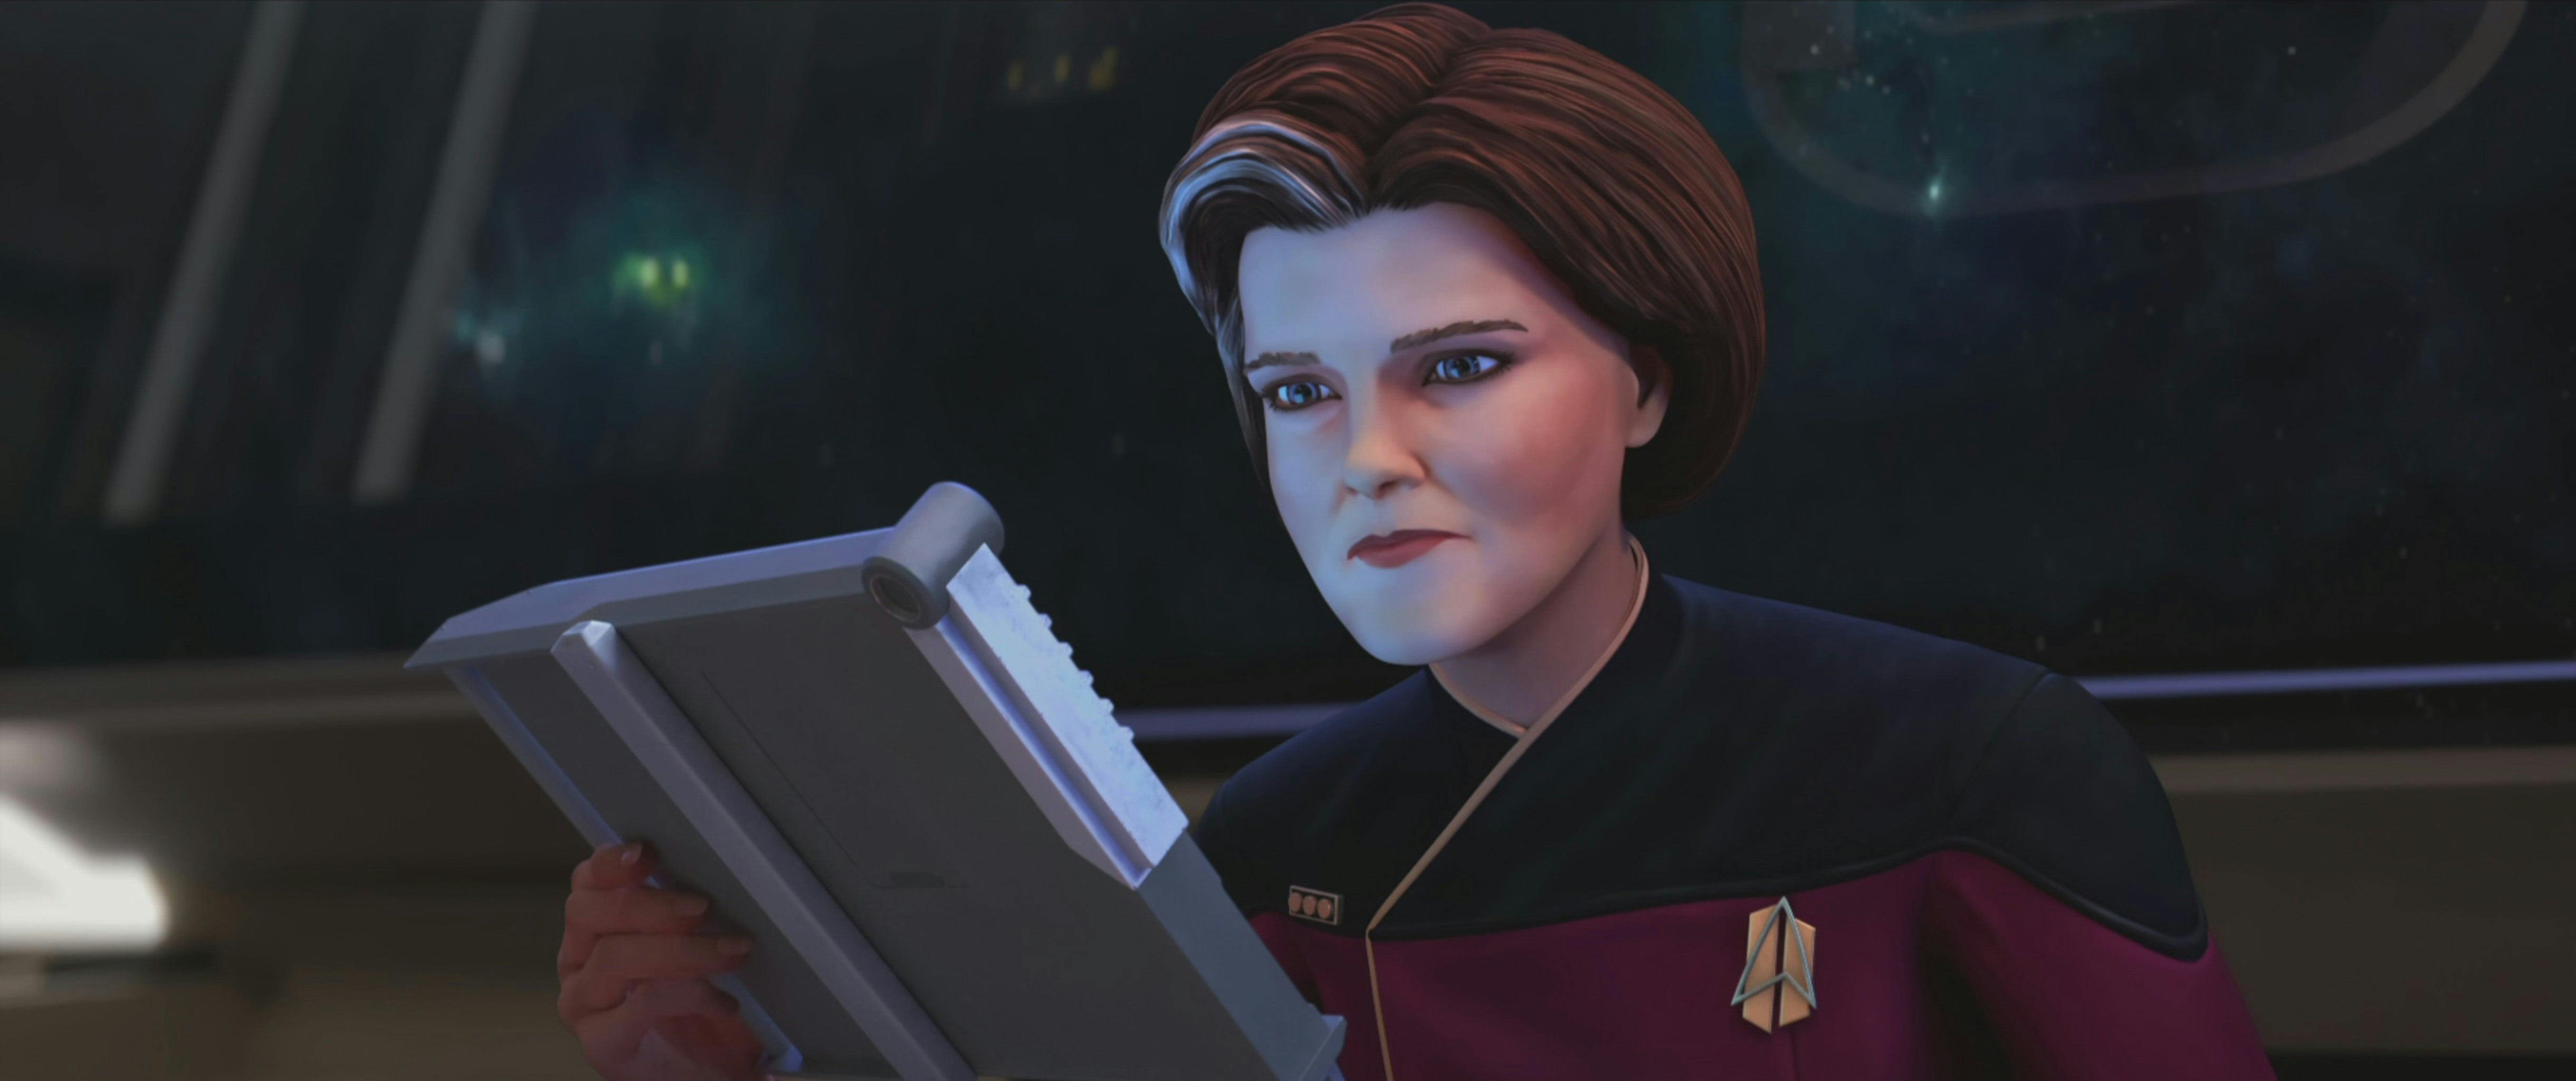 Janeway reading her PADD 